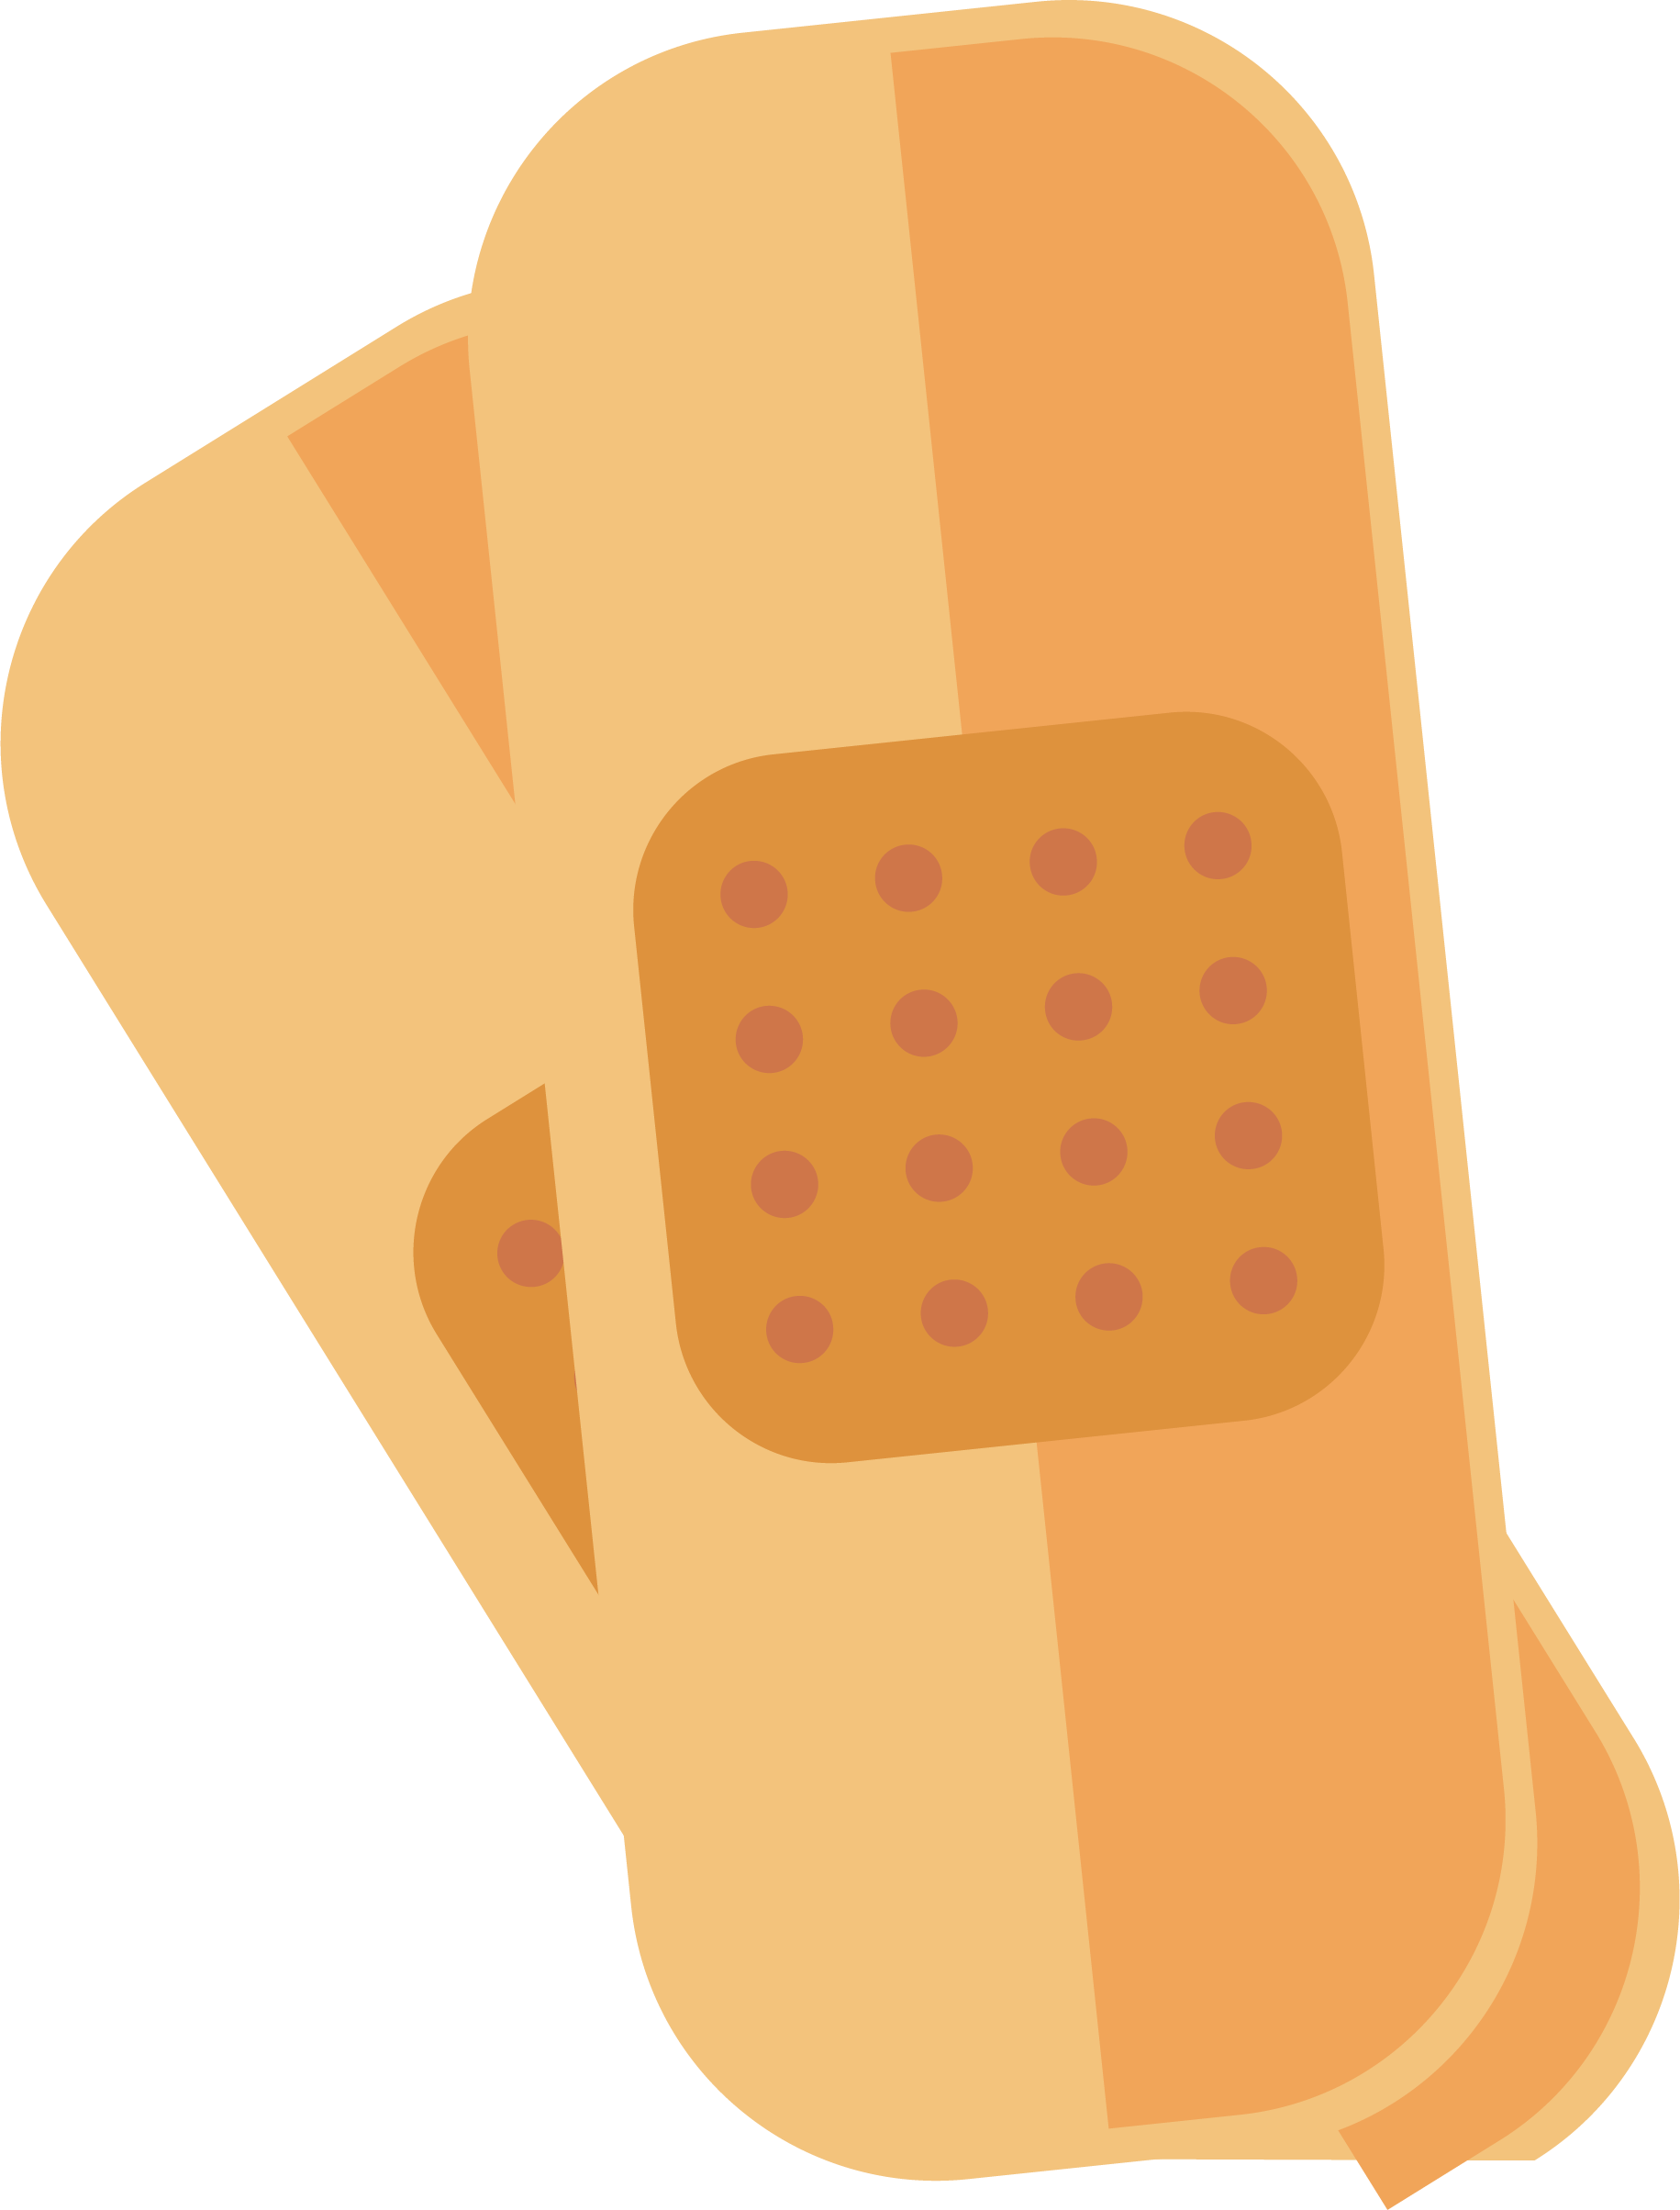 Bandaid Svg Cartoon - Band Aid Emoji Whatsapp Clipart (1831x2408), Png Download